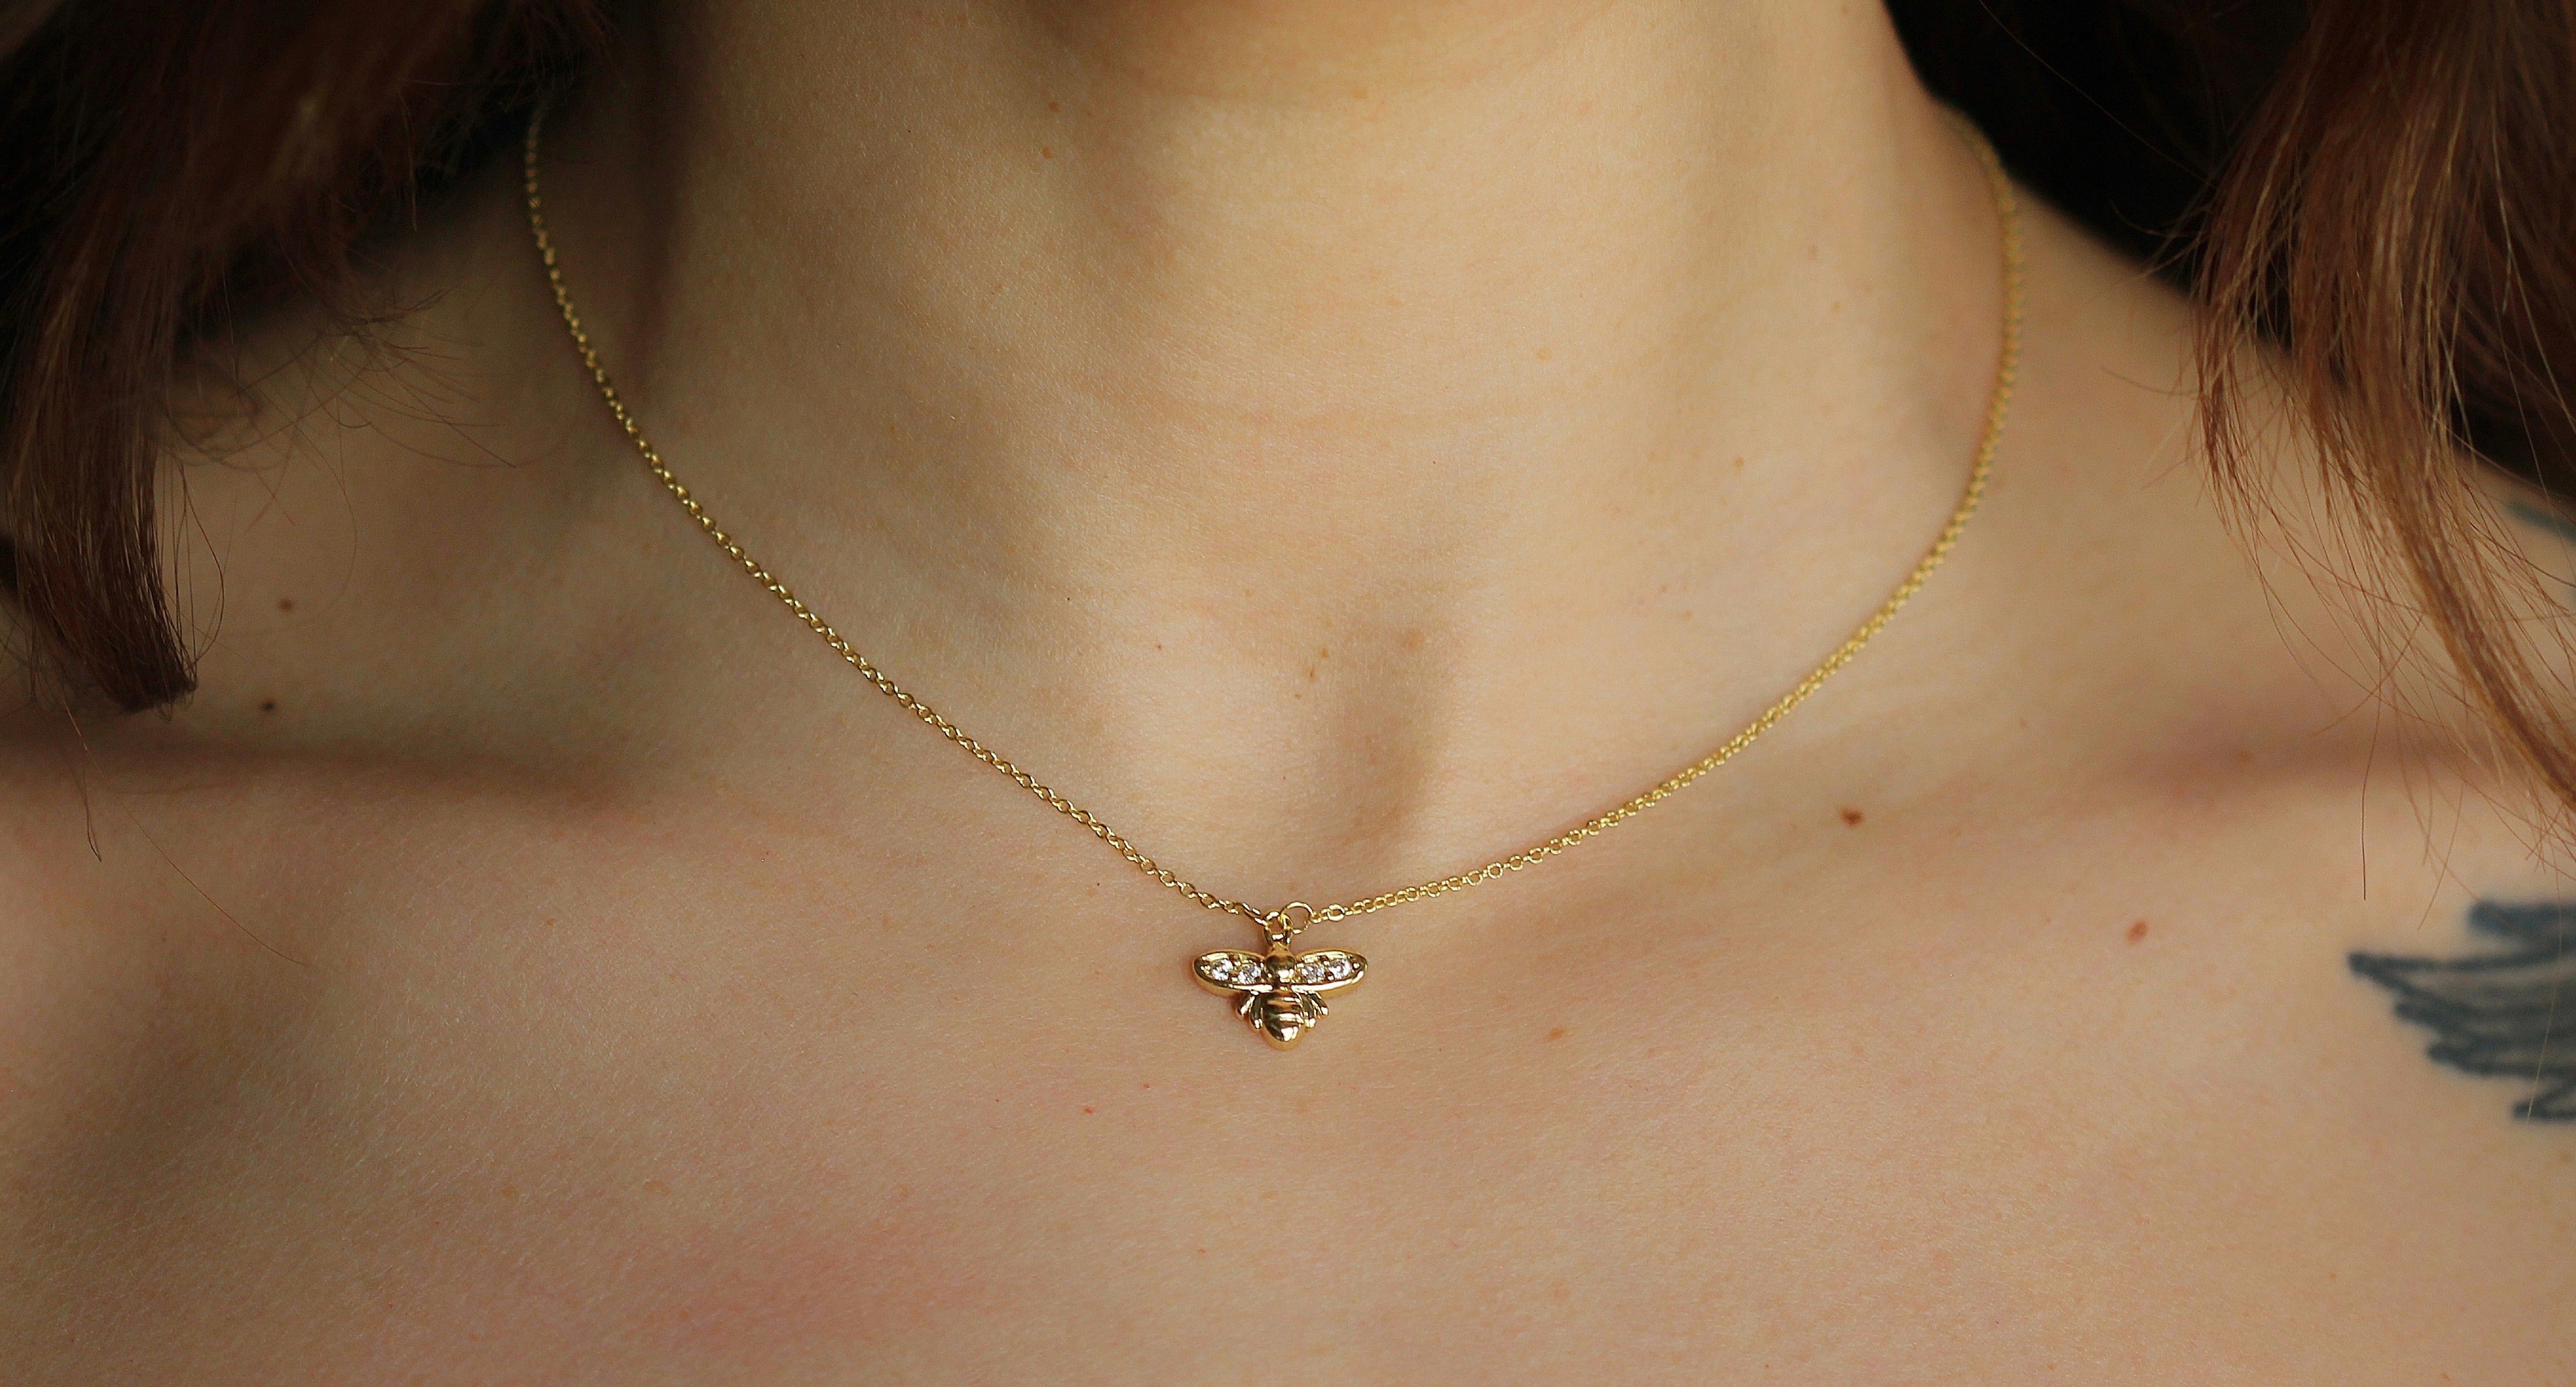 Queen Bee Crystals Necklace